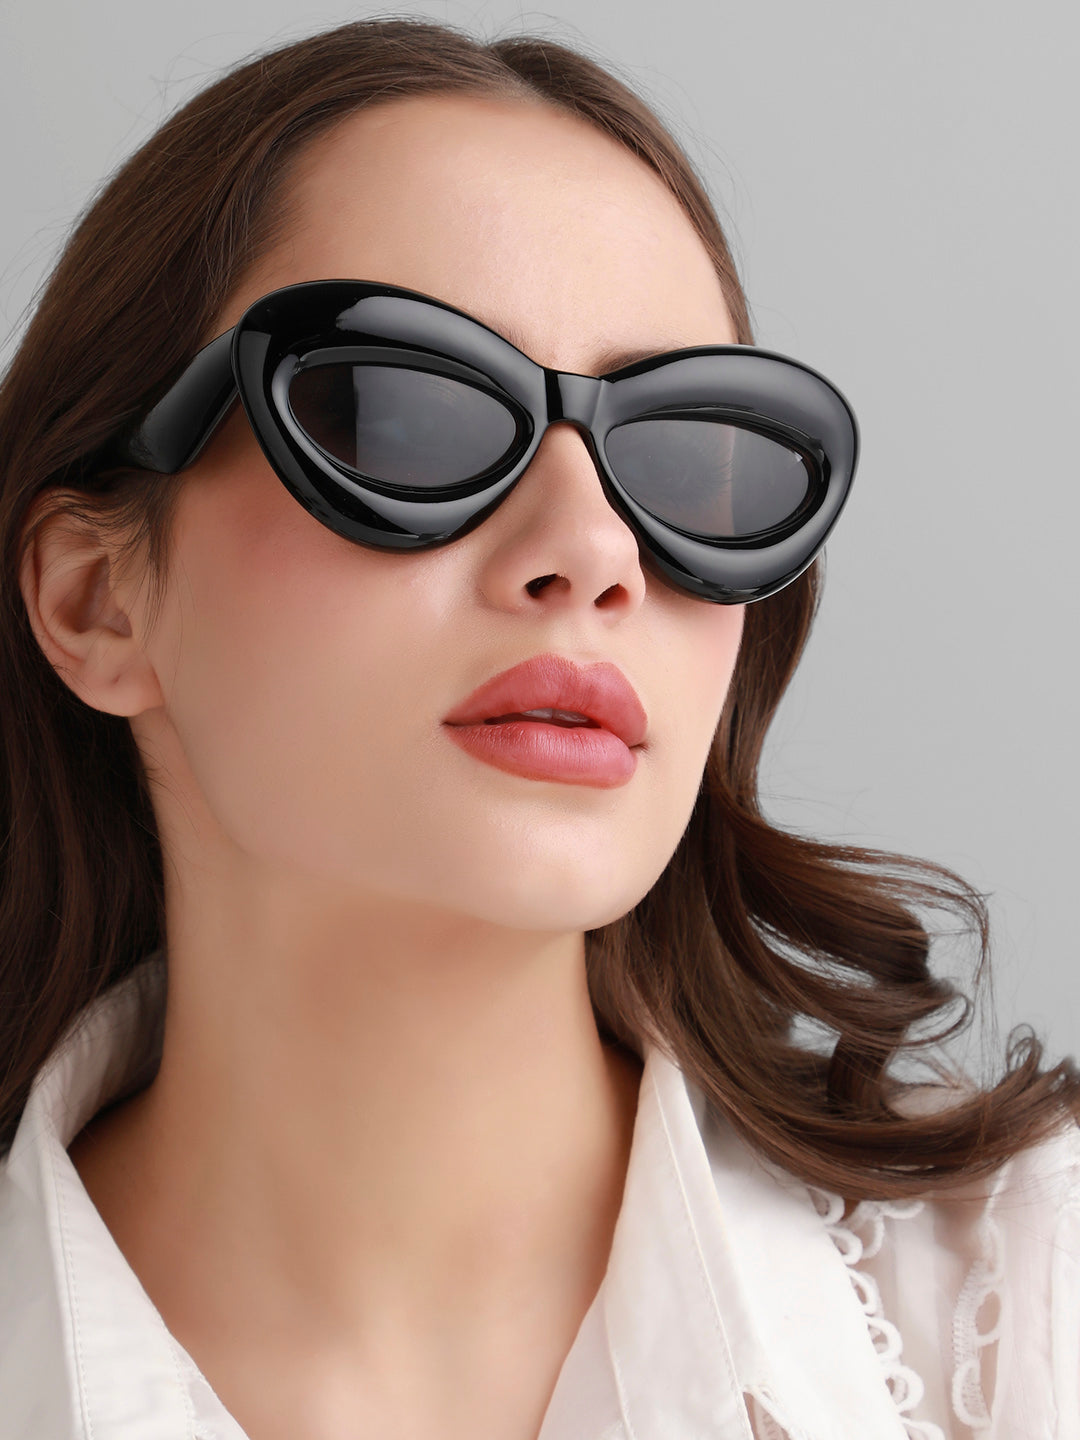 Solid Cateye Sunglasses - Black